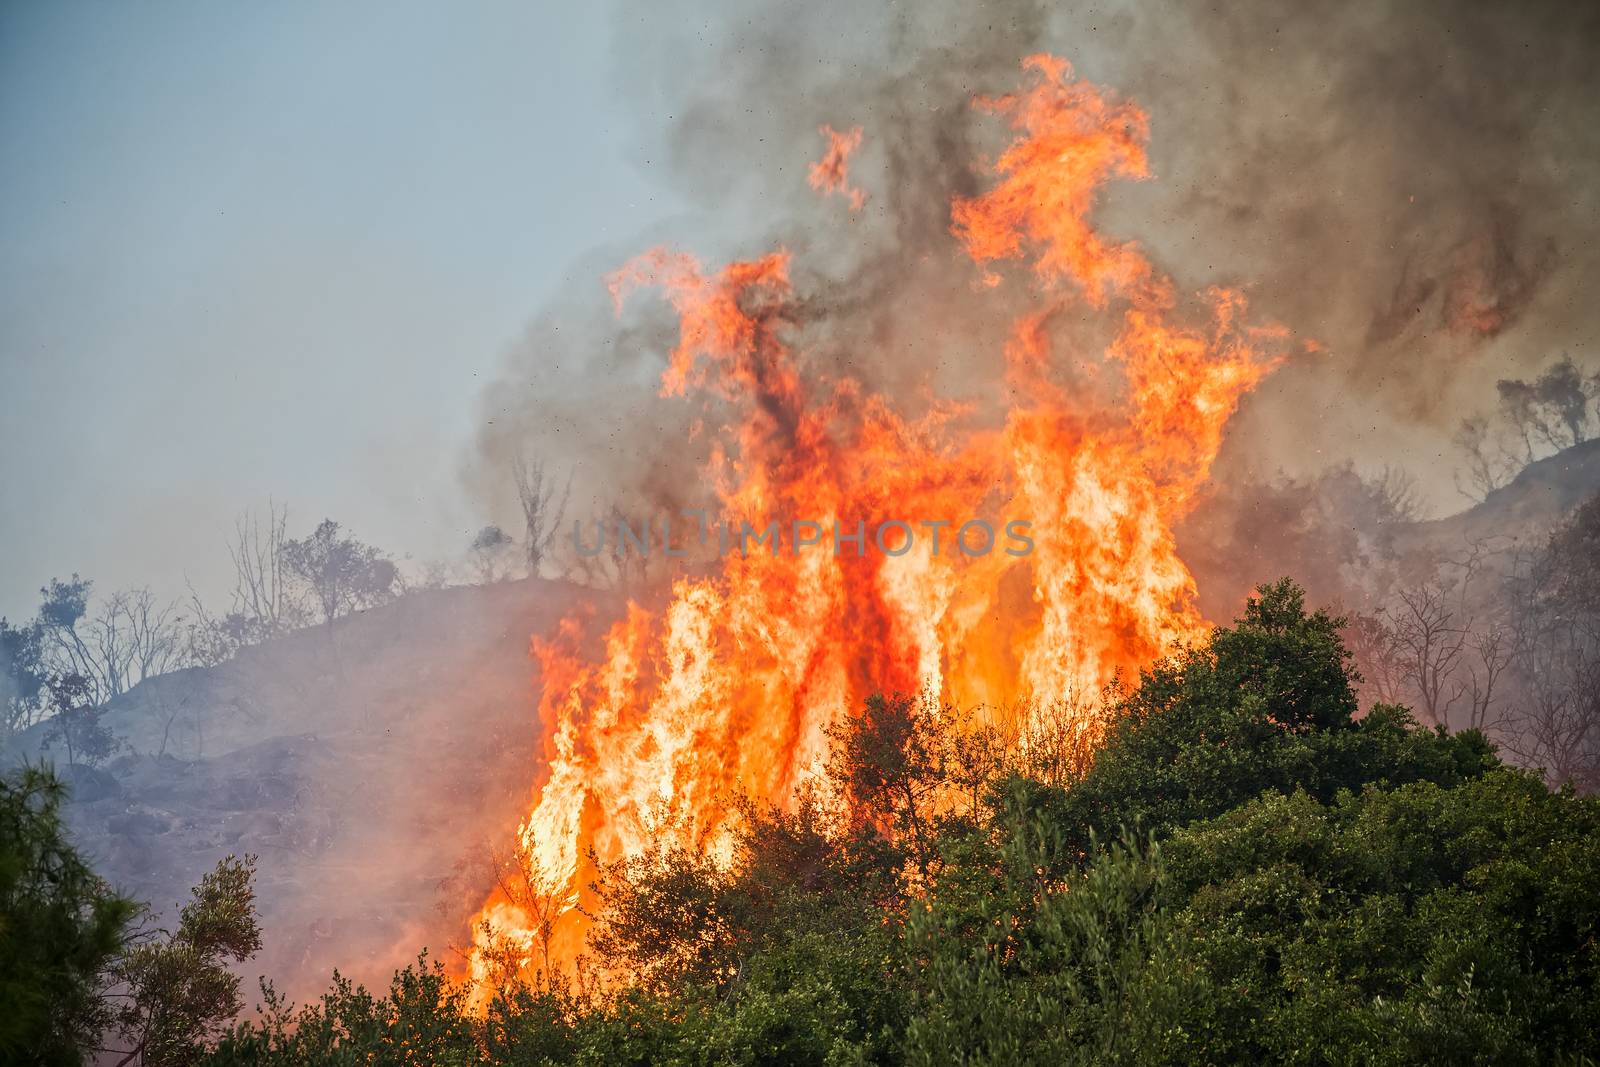 fire in a pine forest in Kassandra, Chalkidiki, Greece  by ververidis